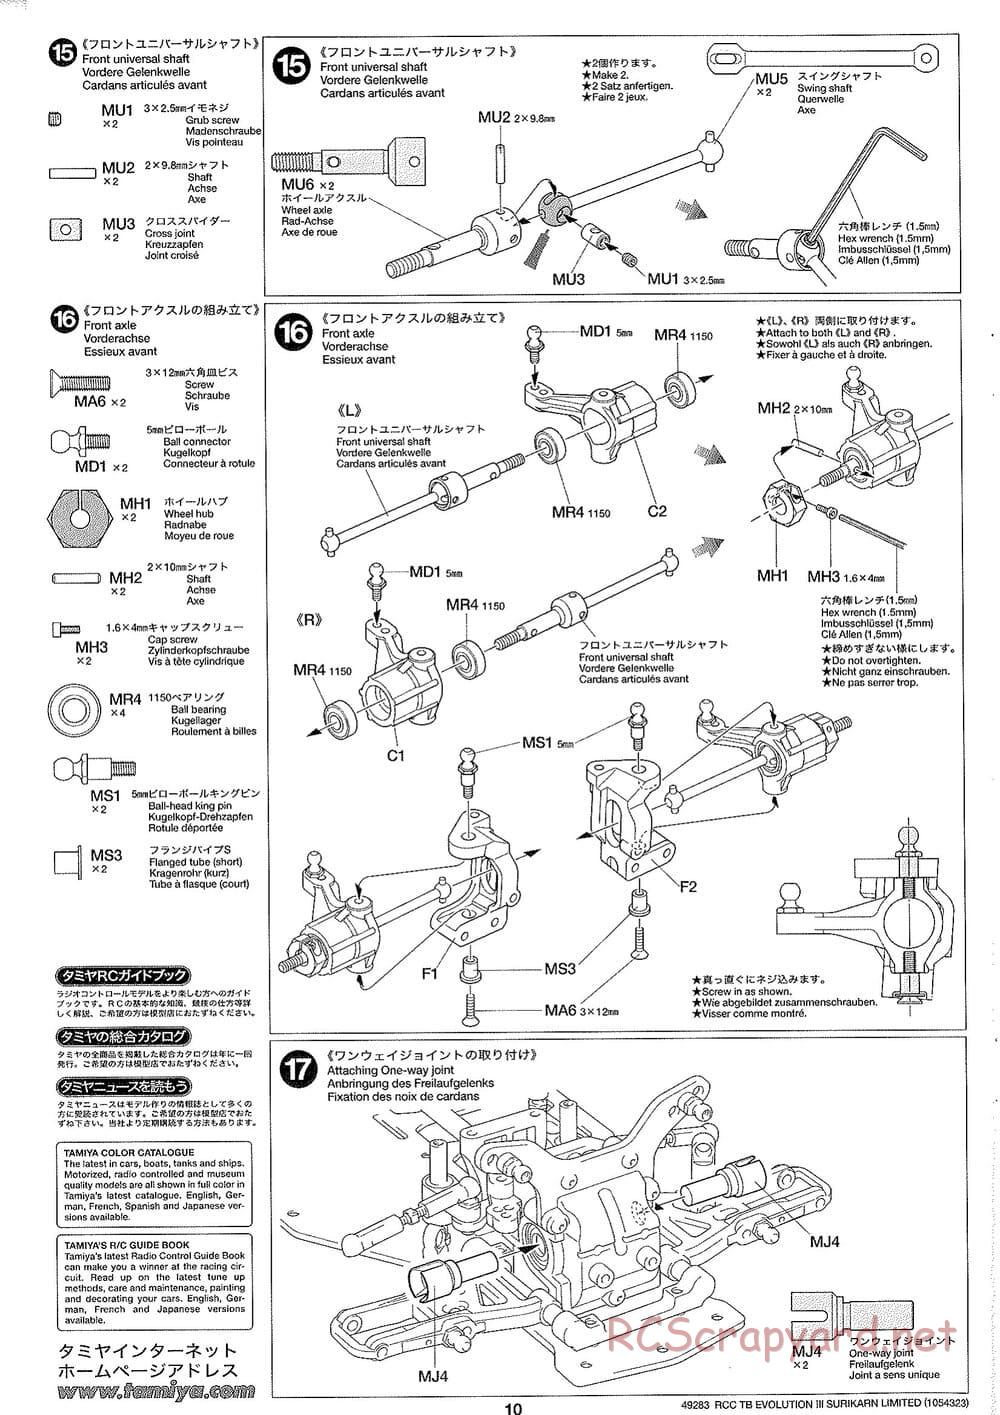 Tamiya - TB Evolution III Surikarn Limited Chassis - Manual - Page 10